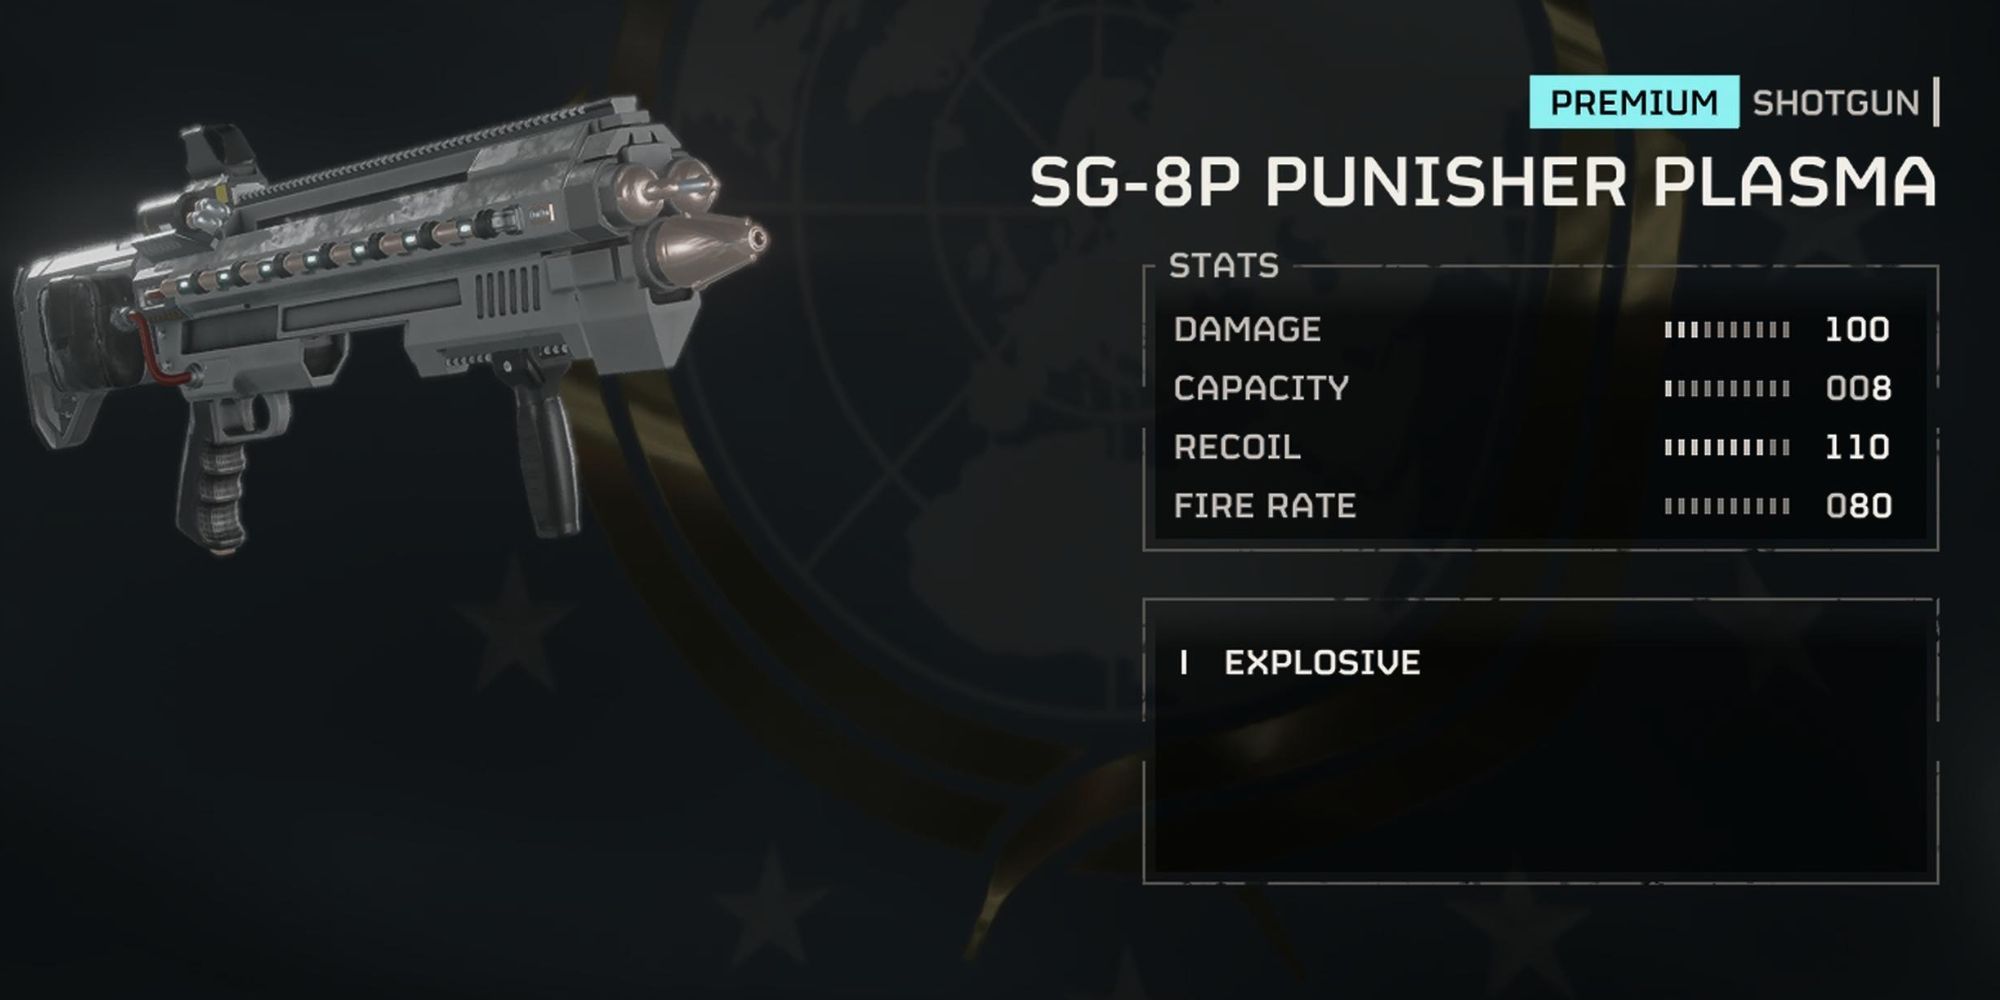 Punisher Plasma